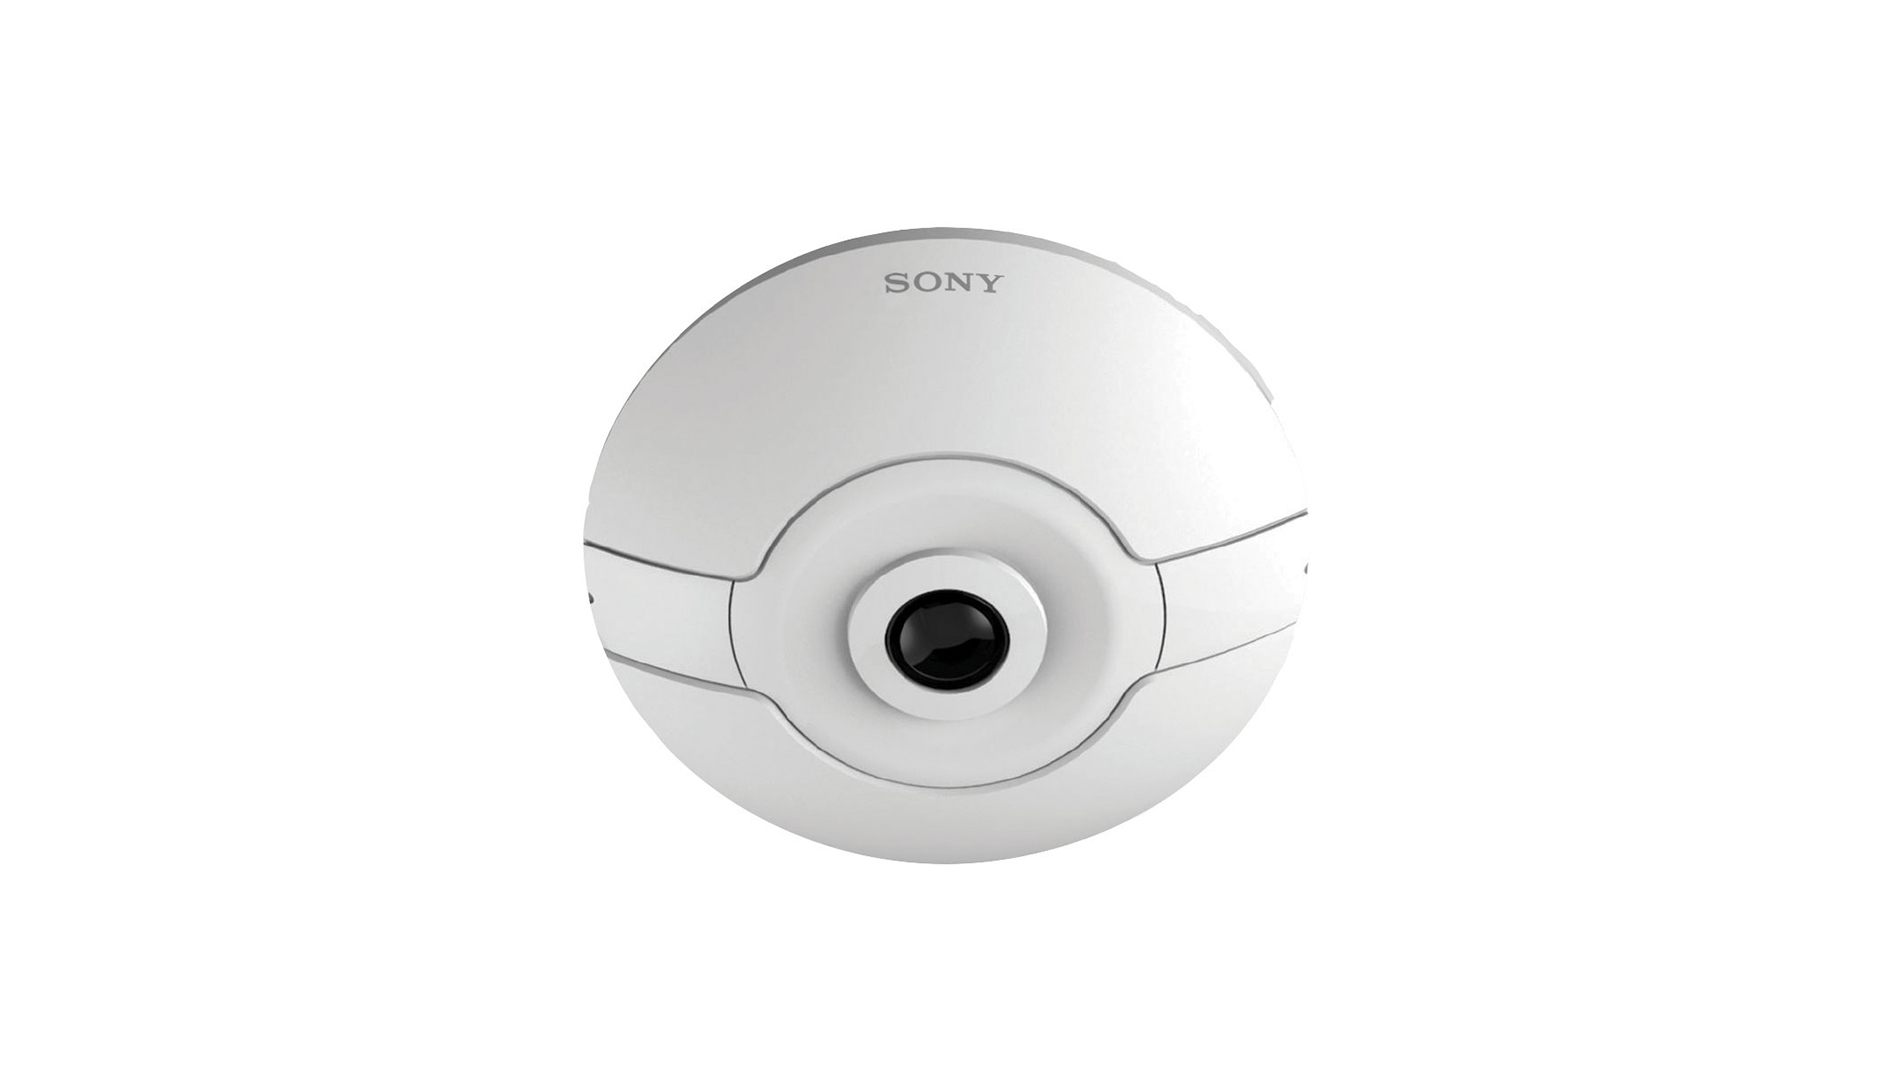 Sony's SNC-HMX70 Hemispheric-View IP-Network Security Camera